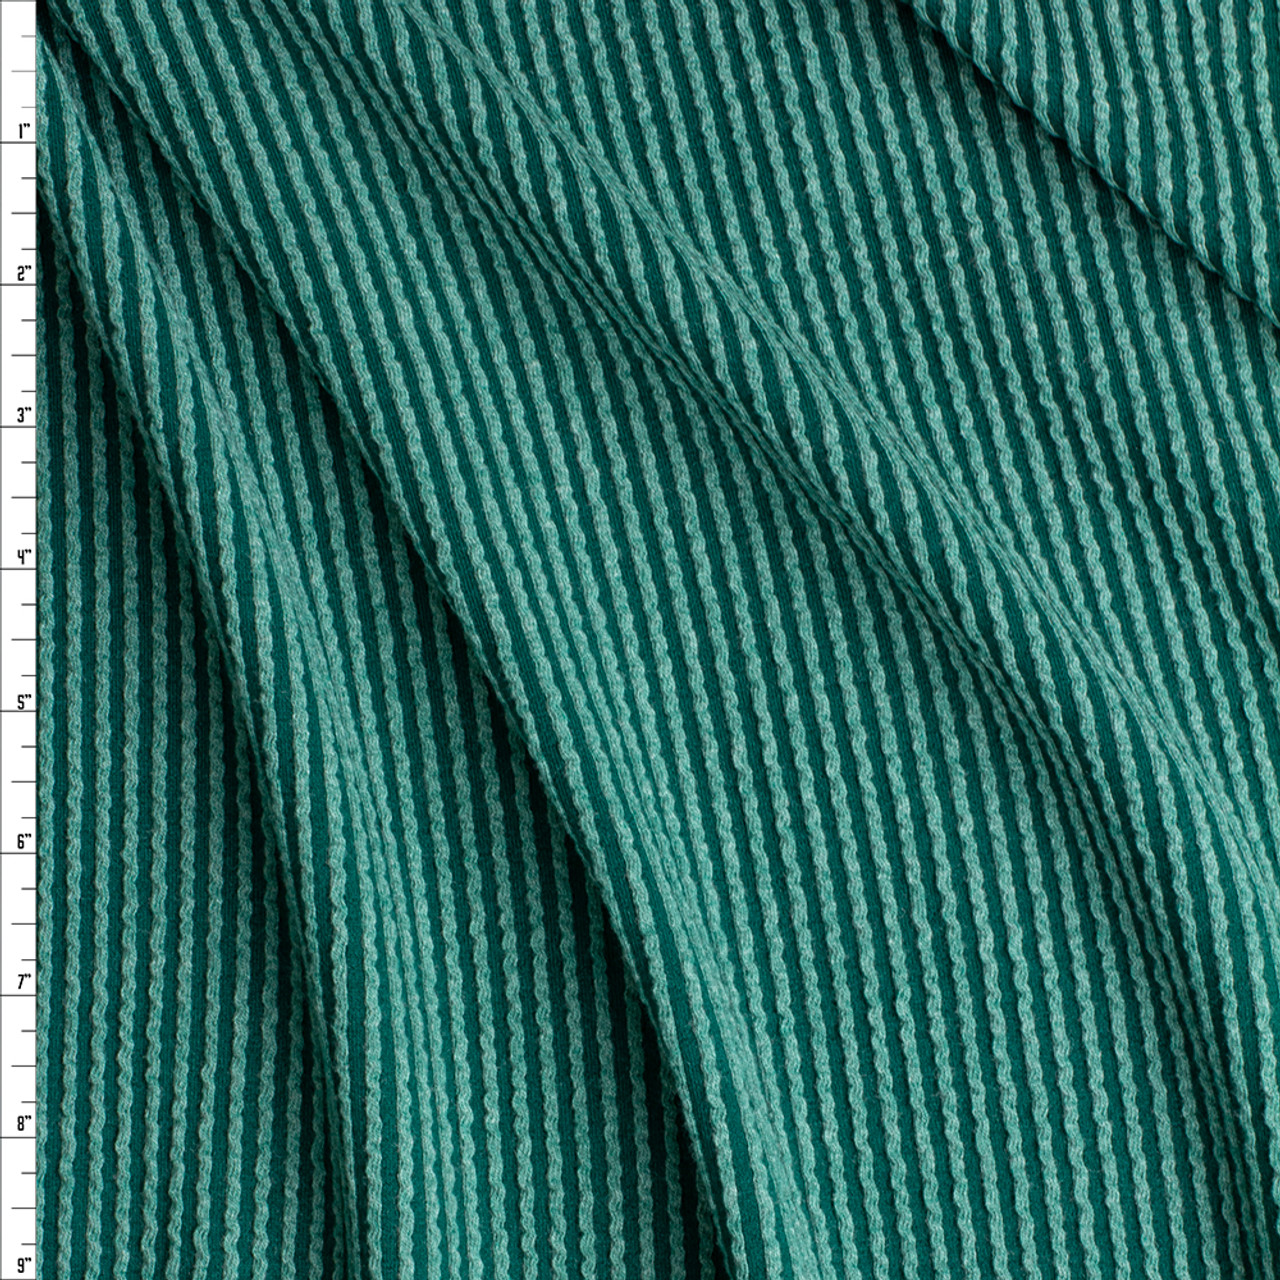 Cotton Elastane Rib 2 Way Stretch Jersey Fabric